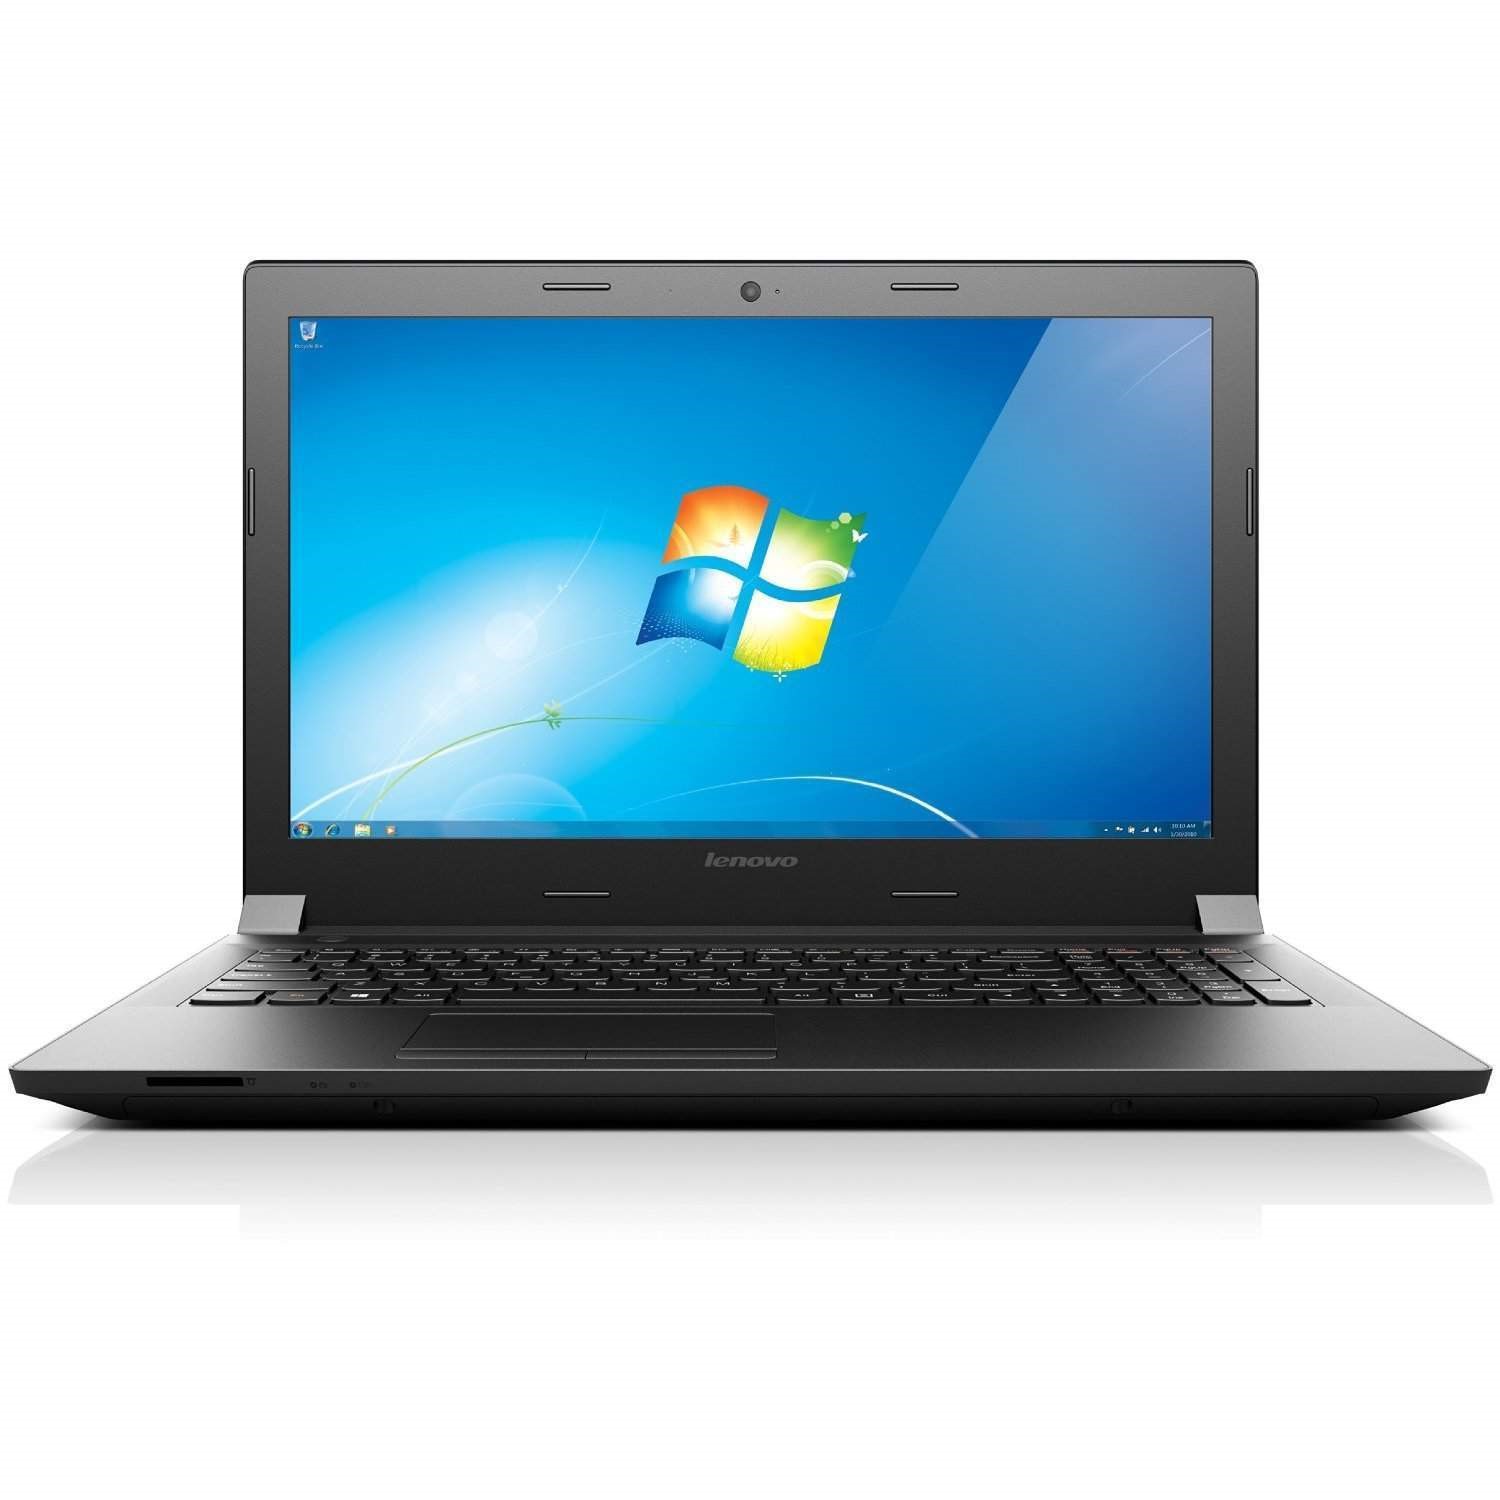 Характеристики ноутбука леново ideapad. Ноутбук Lenovo b5030. Ноутбук Lenovo IDEAPAD в5030. Lenovo IDEAPAD b50-30. Ноутбук леново g5030.